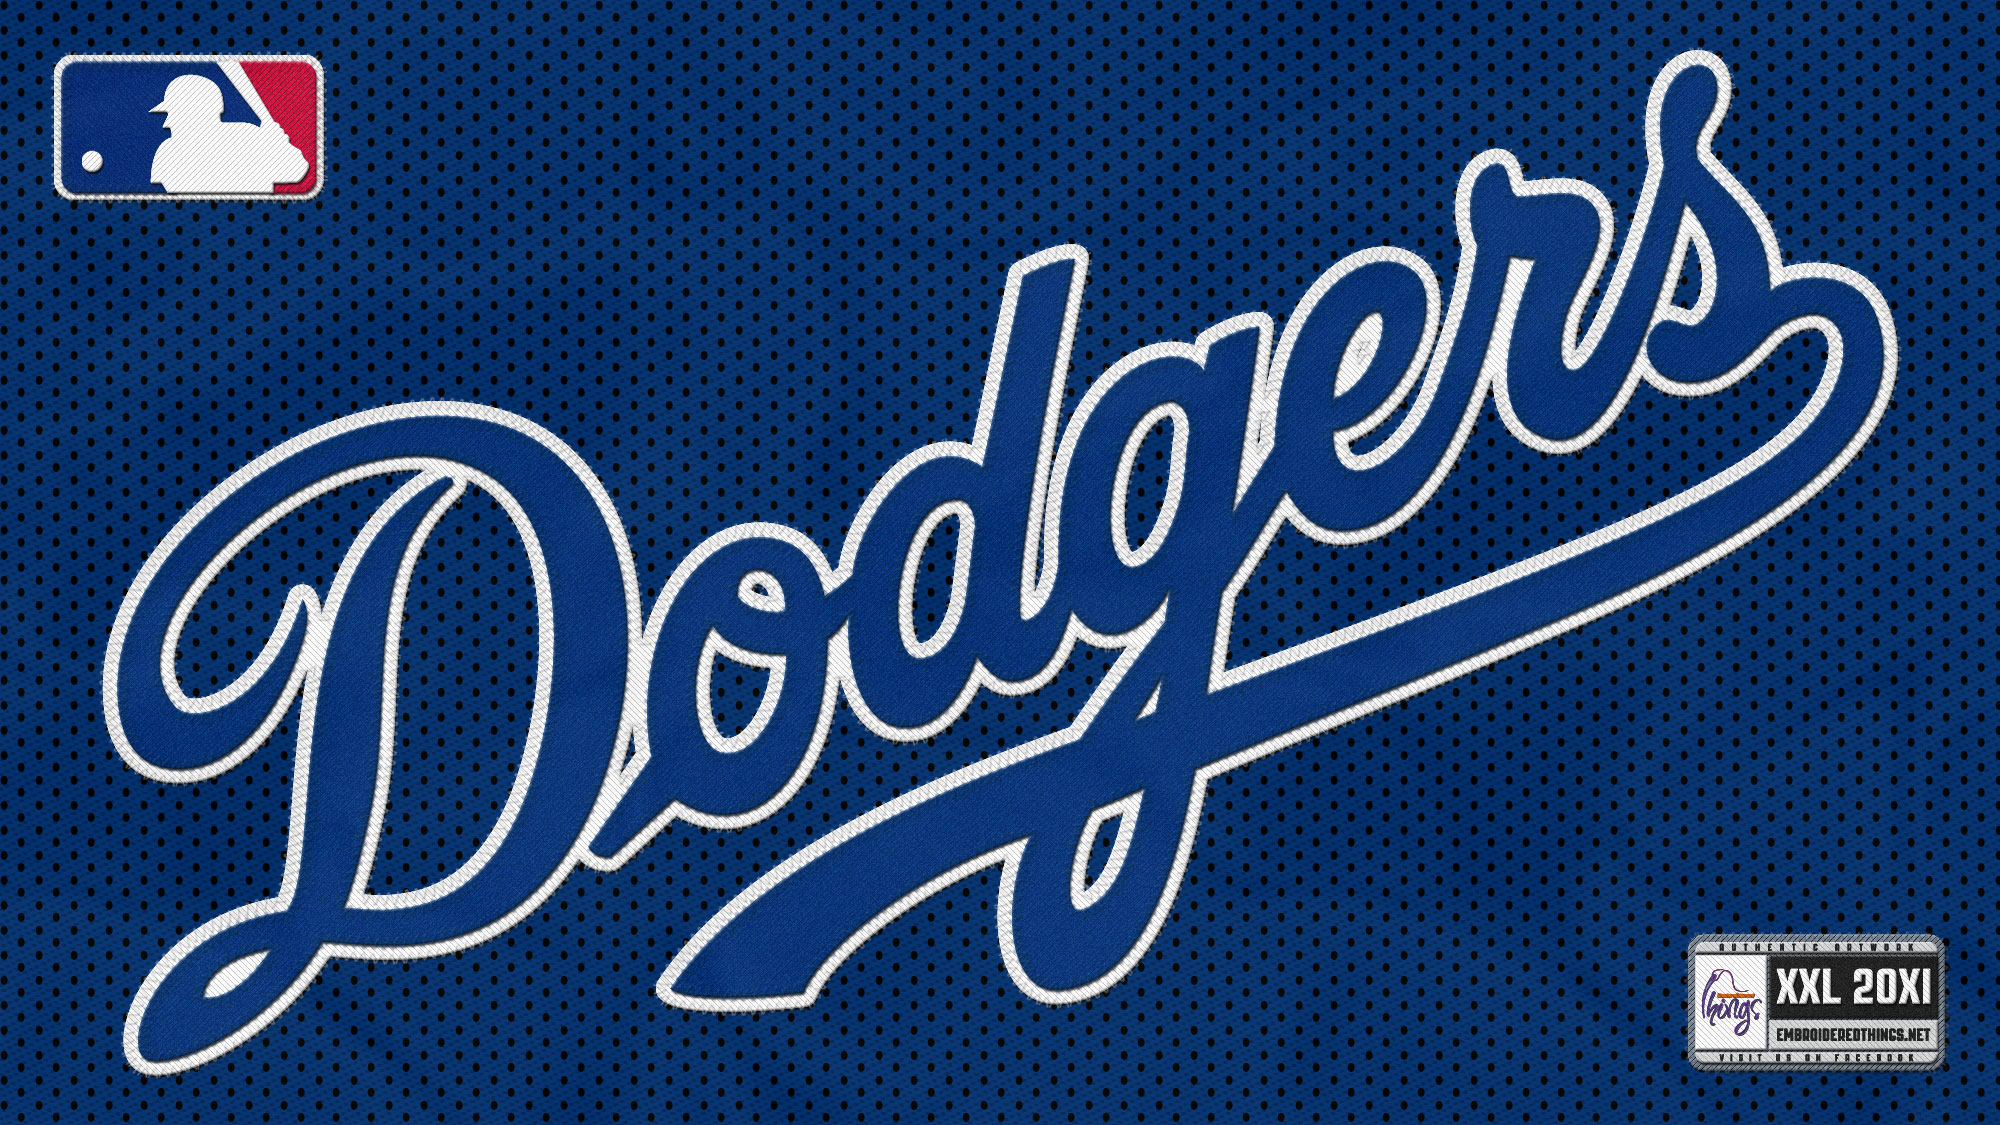 Free Los Angeles Dodgers wallpaper